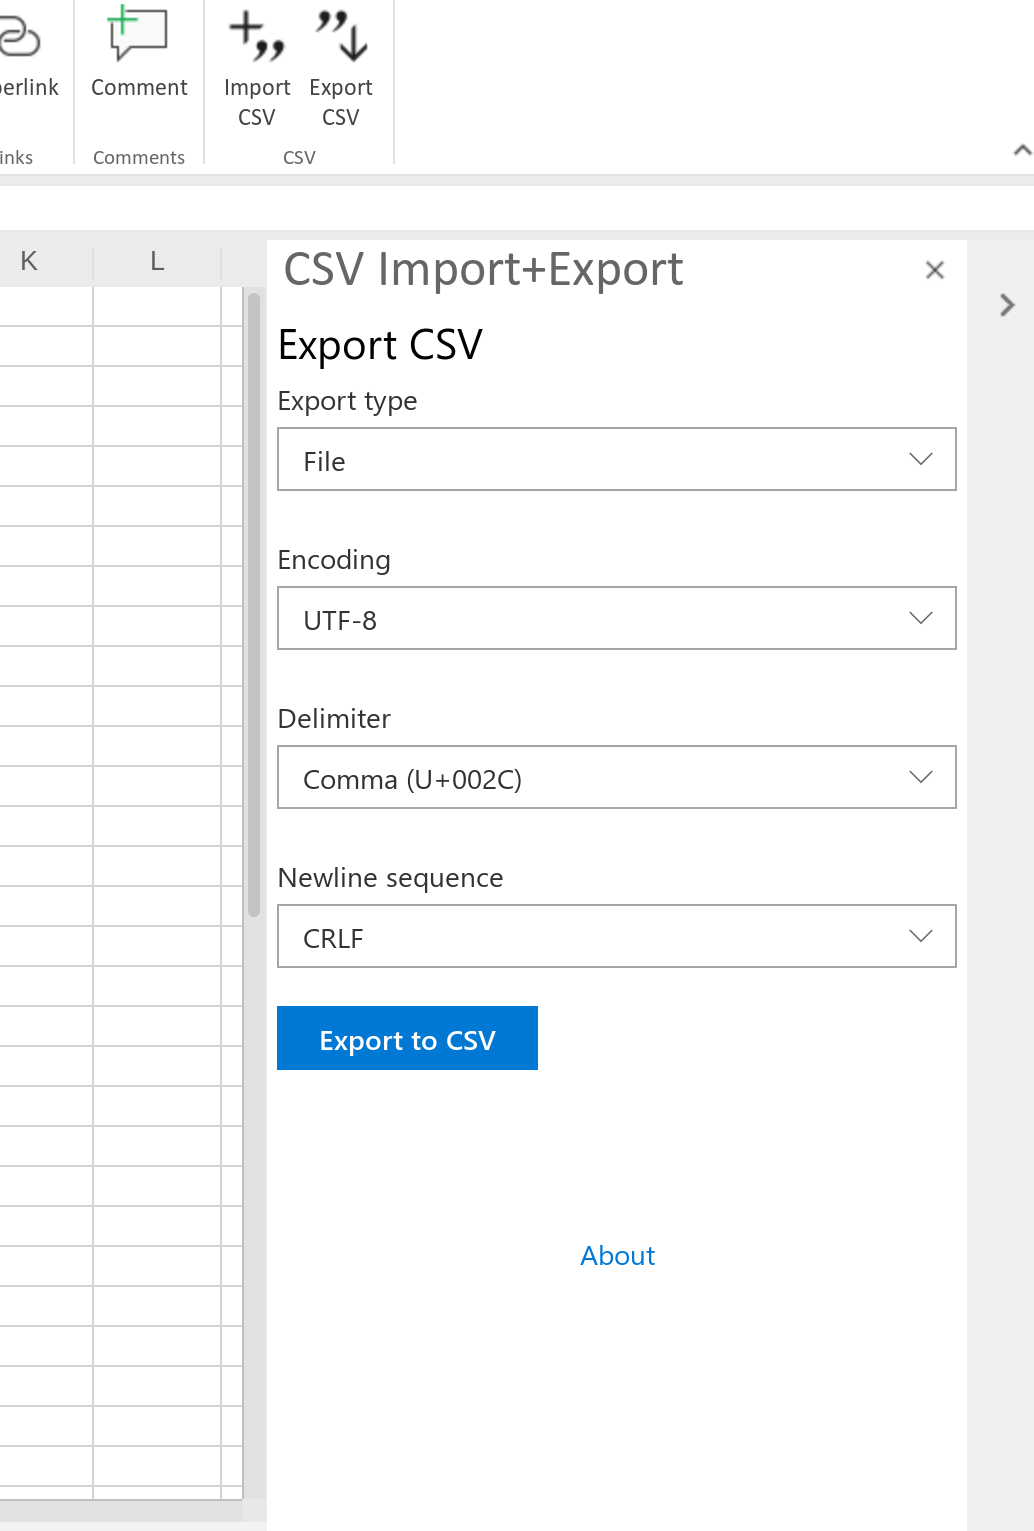 Export CSV taskpane in Excel